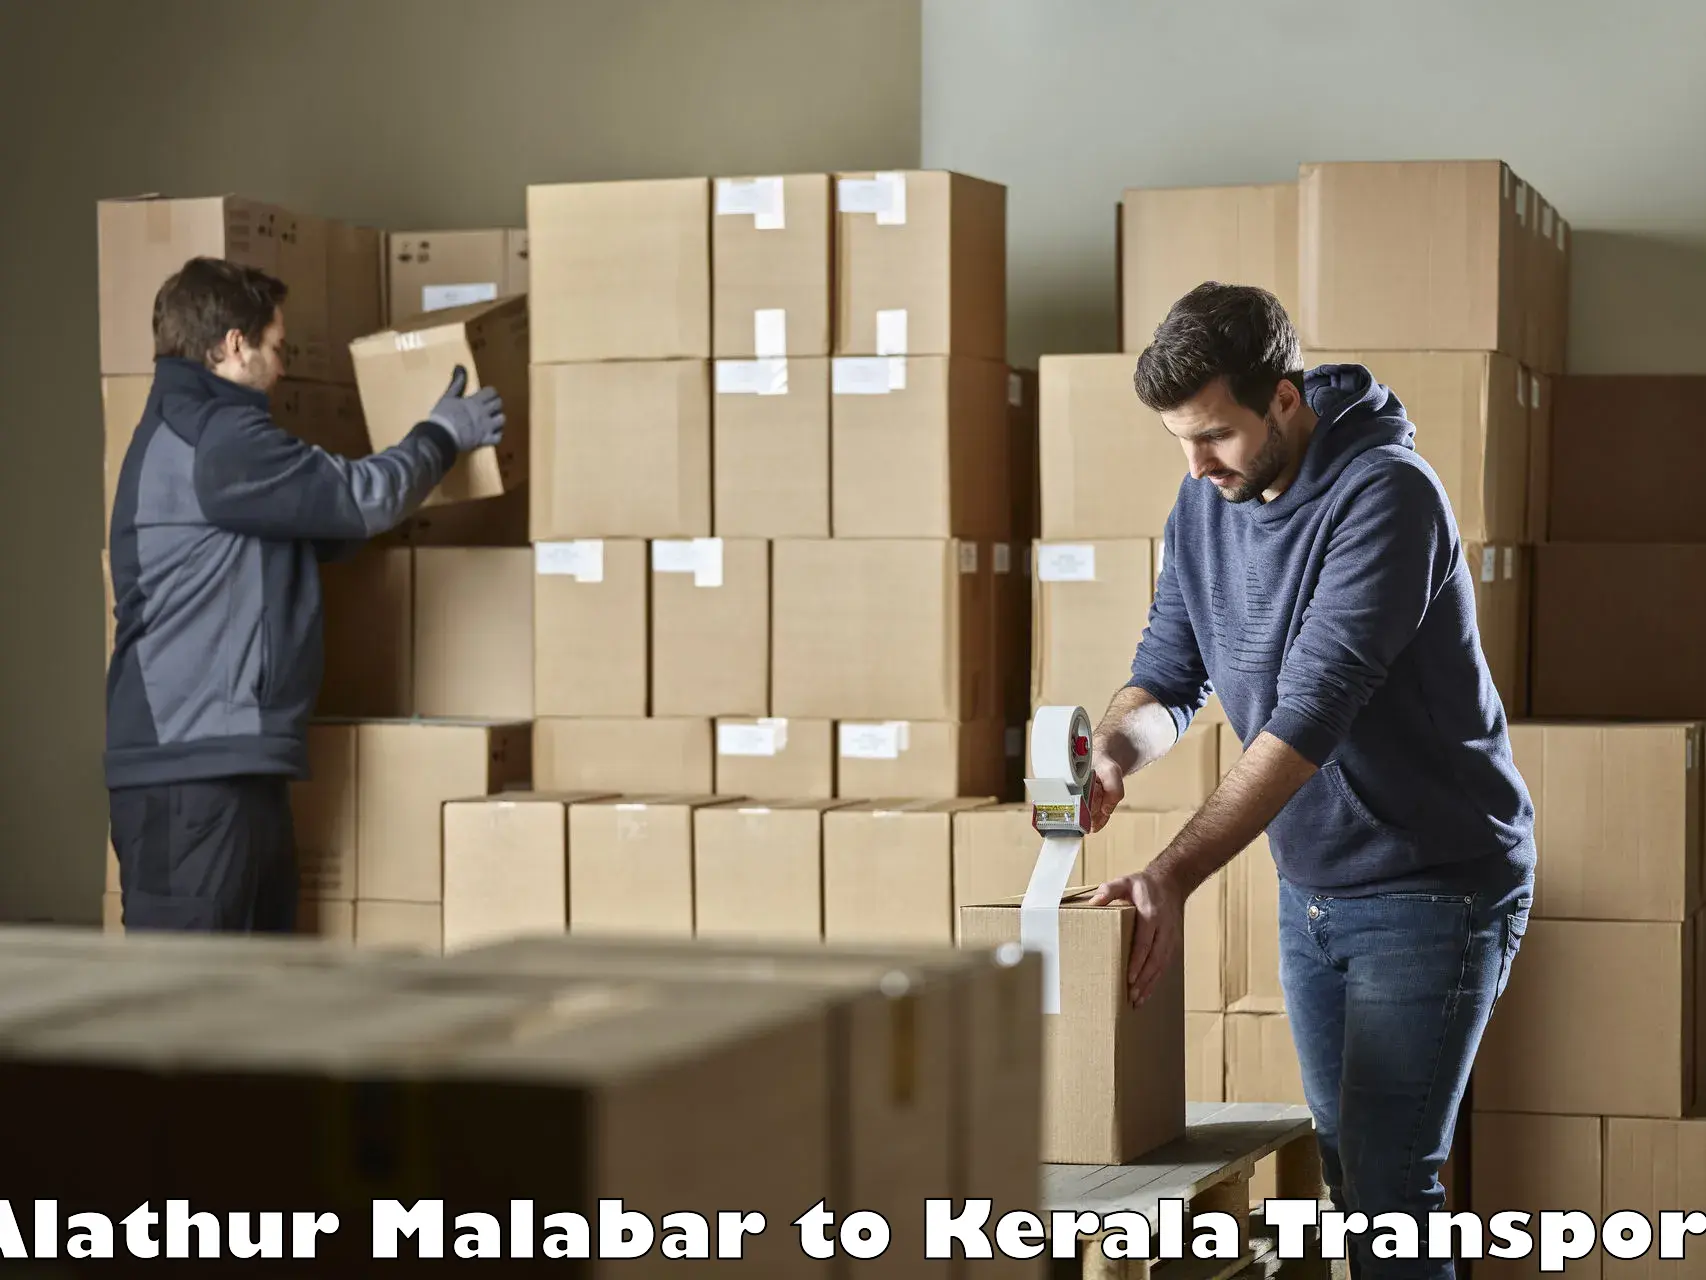 Truck transport companies in India Alathur Malabar to Guruvayur